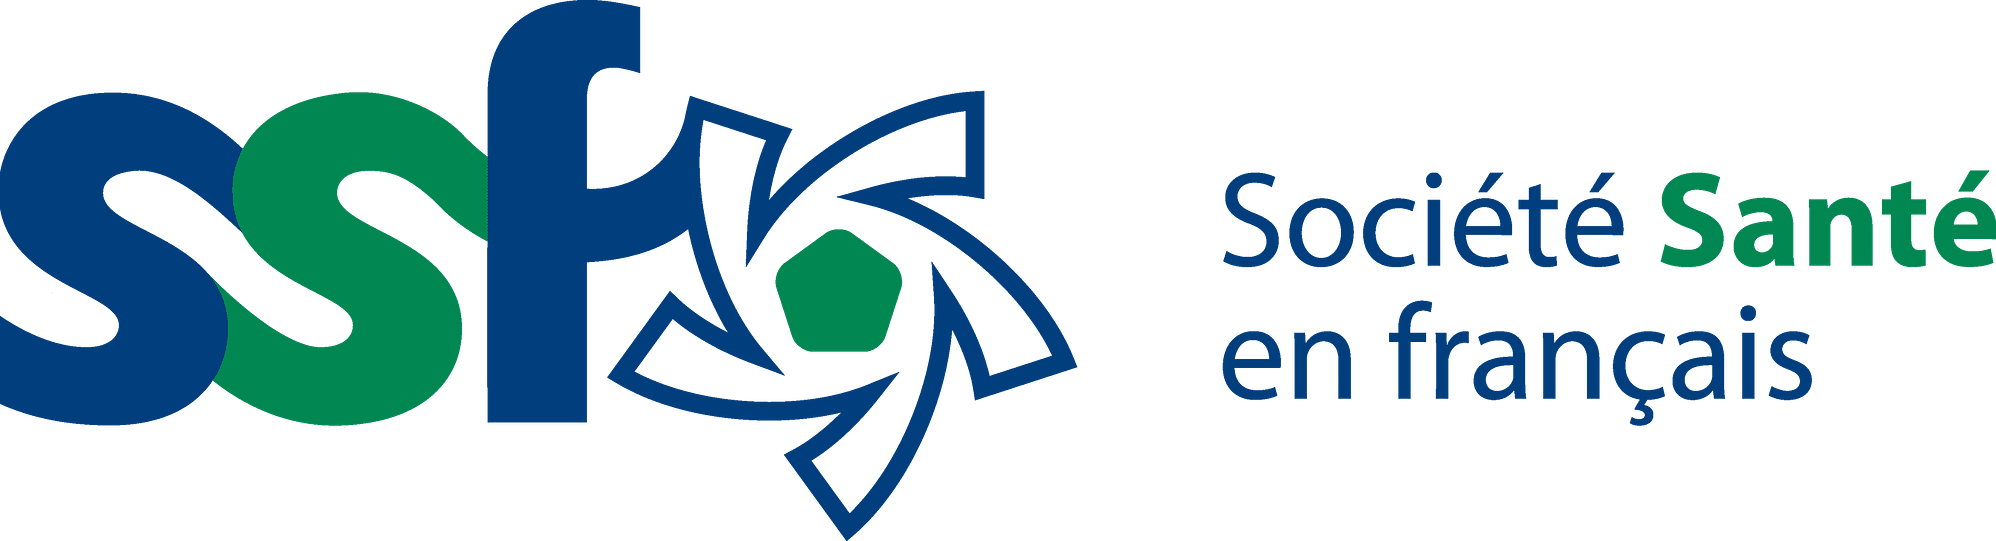 SSf_logo 2010_clr long